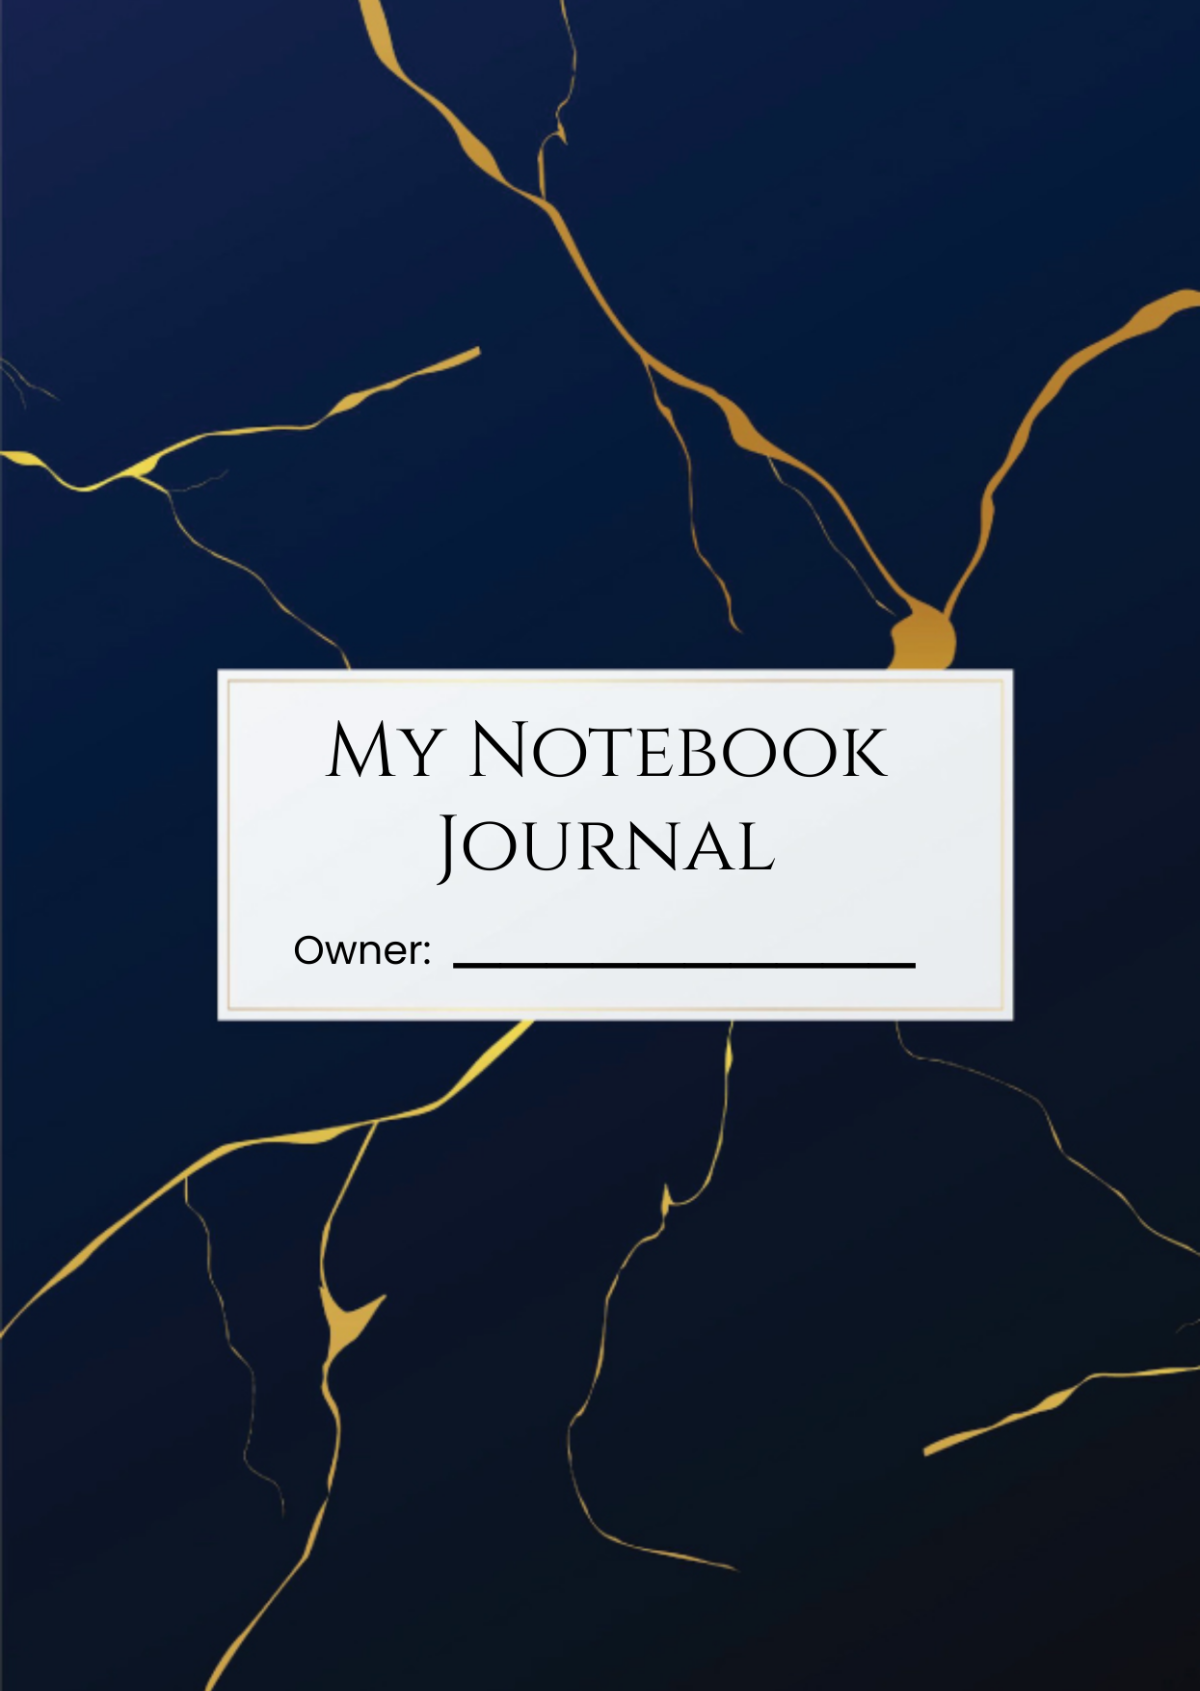 Free Notebook Journals for Macbook Pro